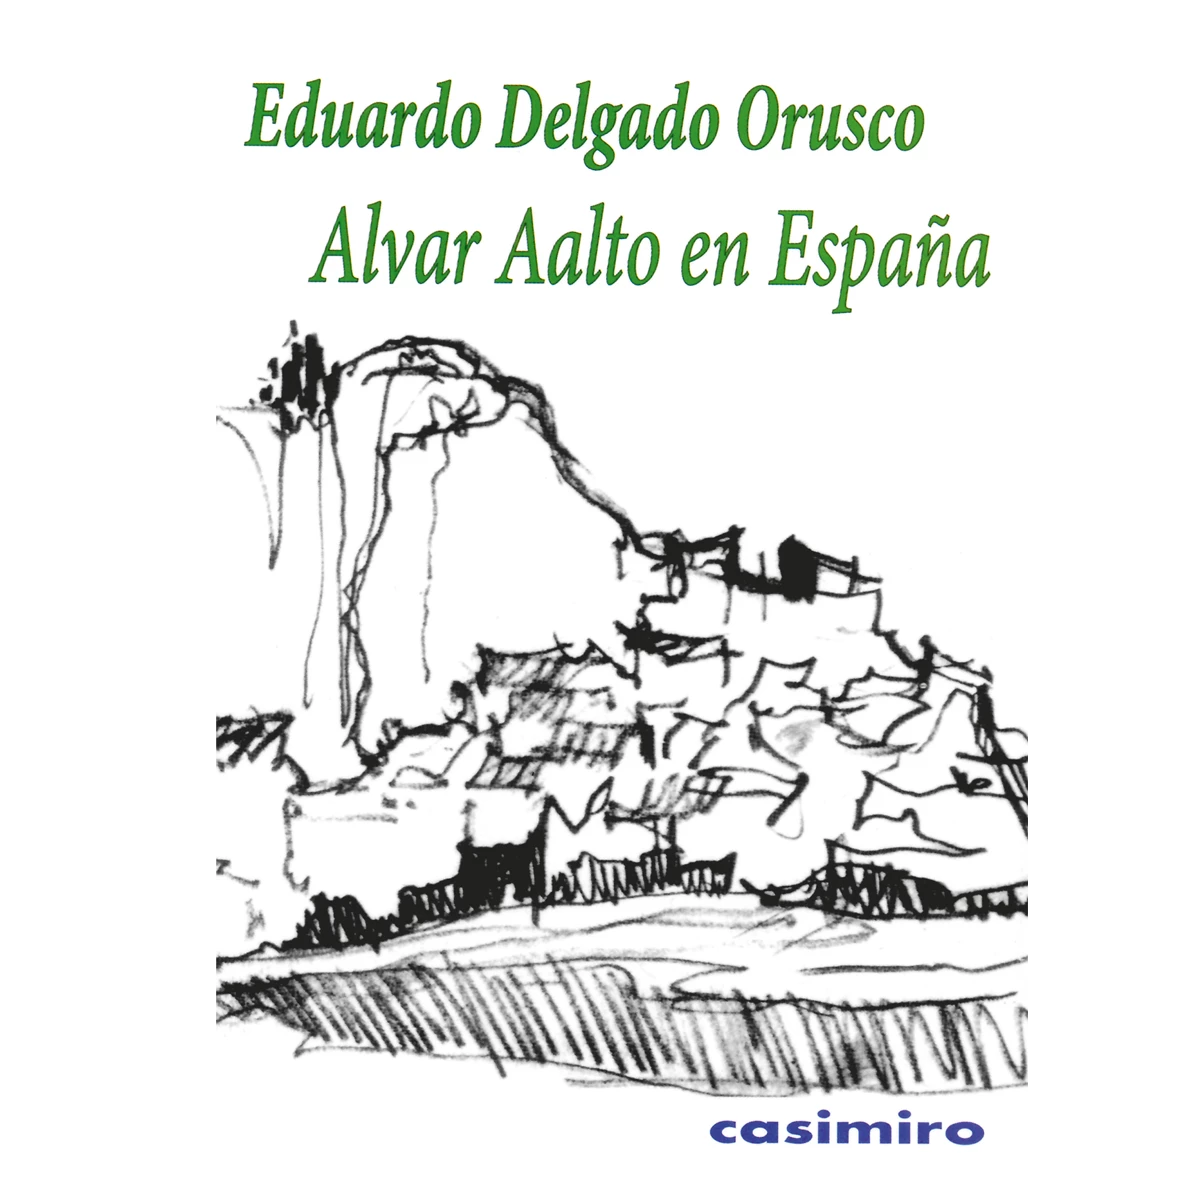 Alvar Aalto en España